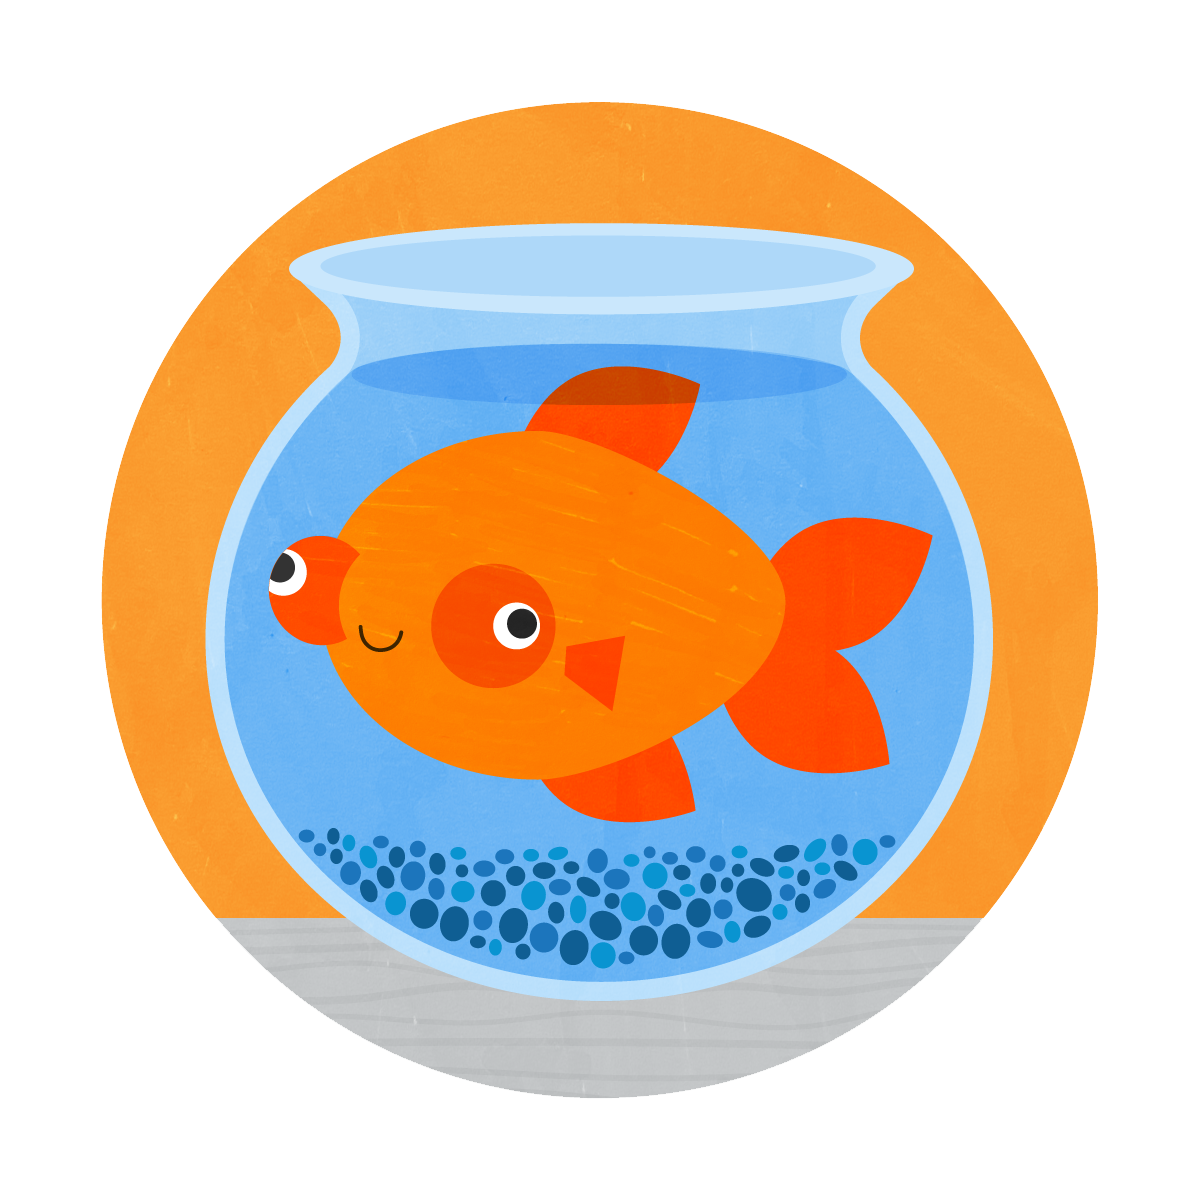 https://www.shirleyabrahamson.org/wp-content/uploads/2022/04/Tootsie-Goldfish.png{https://www.shirleyabrahamson.org/wp-content/uploads/2022/04/Tootsie-Goldfish.png}